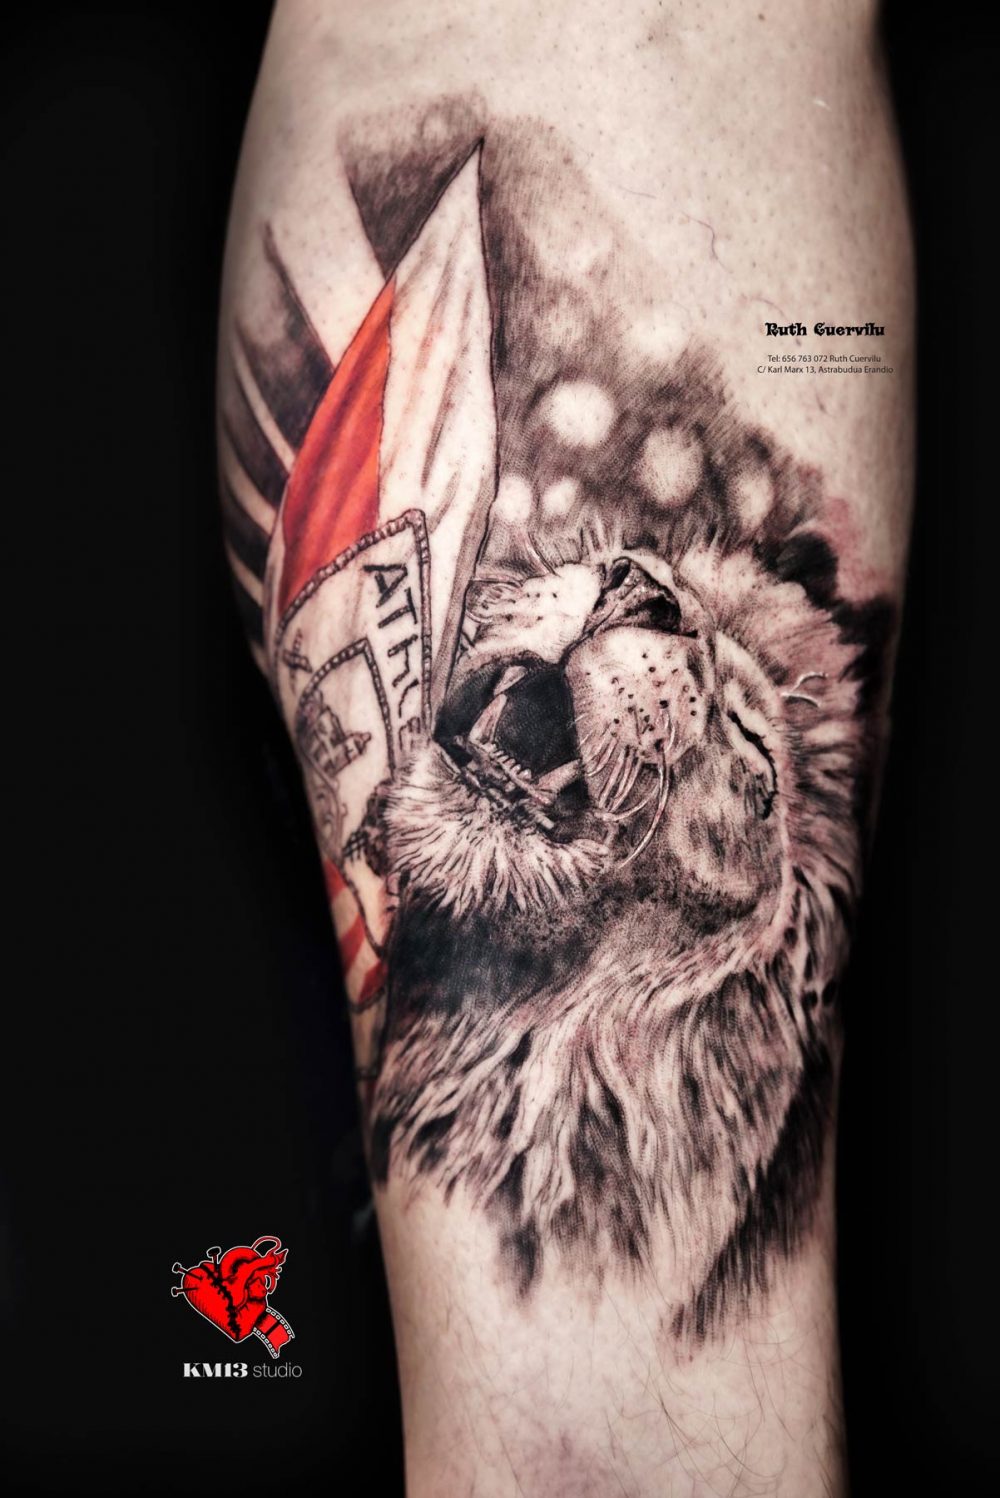 Tatuaje Realismo Leon Feliz Athletic Club bilbao - Ruth Cuervilu tattoo km13 studio - estudio de tatuajes erandio